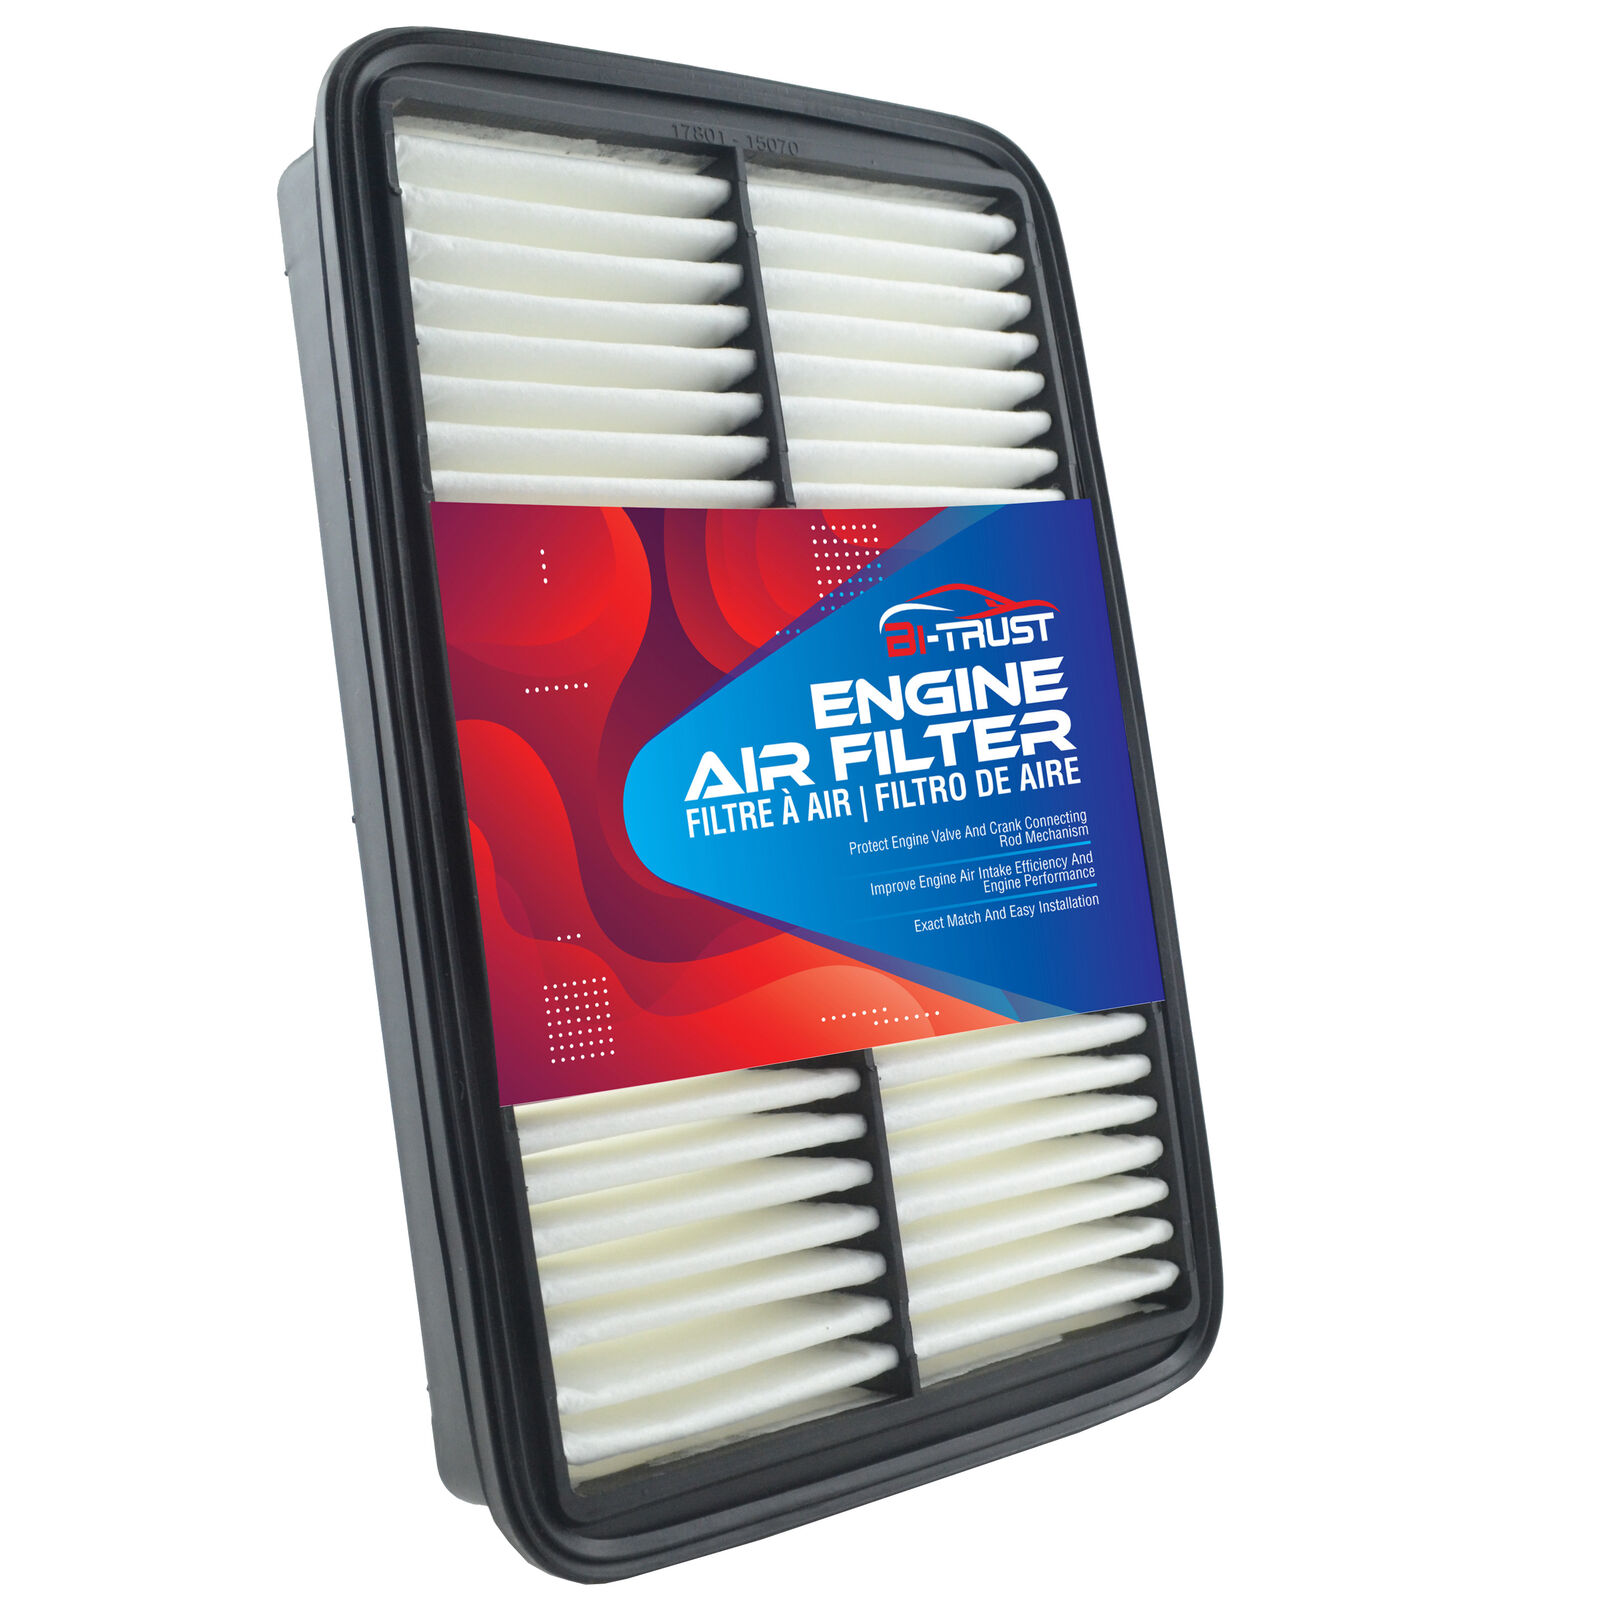 Air Filter for Chevrolet Prizm 98-02 Mazda Millenia 95-02 Toyota Corolla 93-97